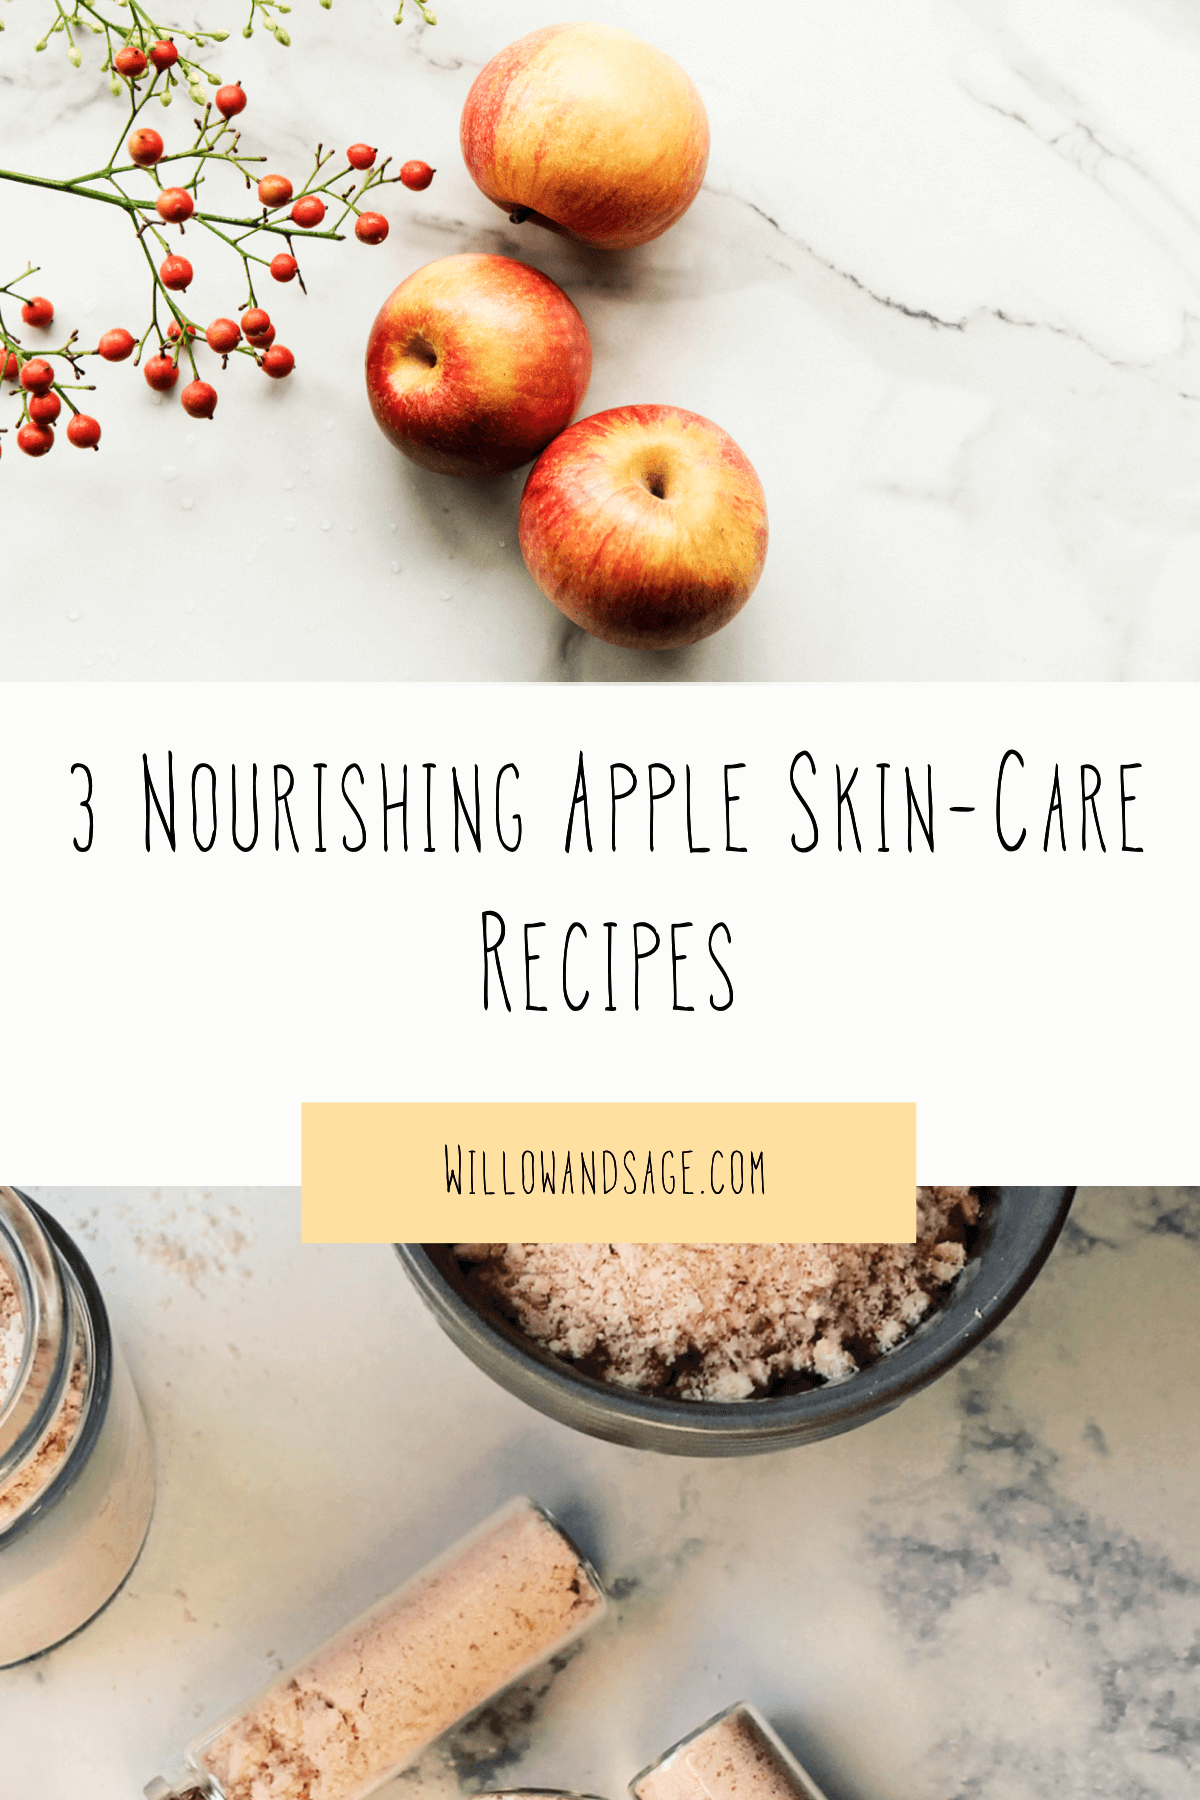 3 Nourishing Apple Skin-Care Recipes